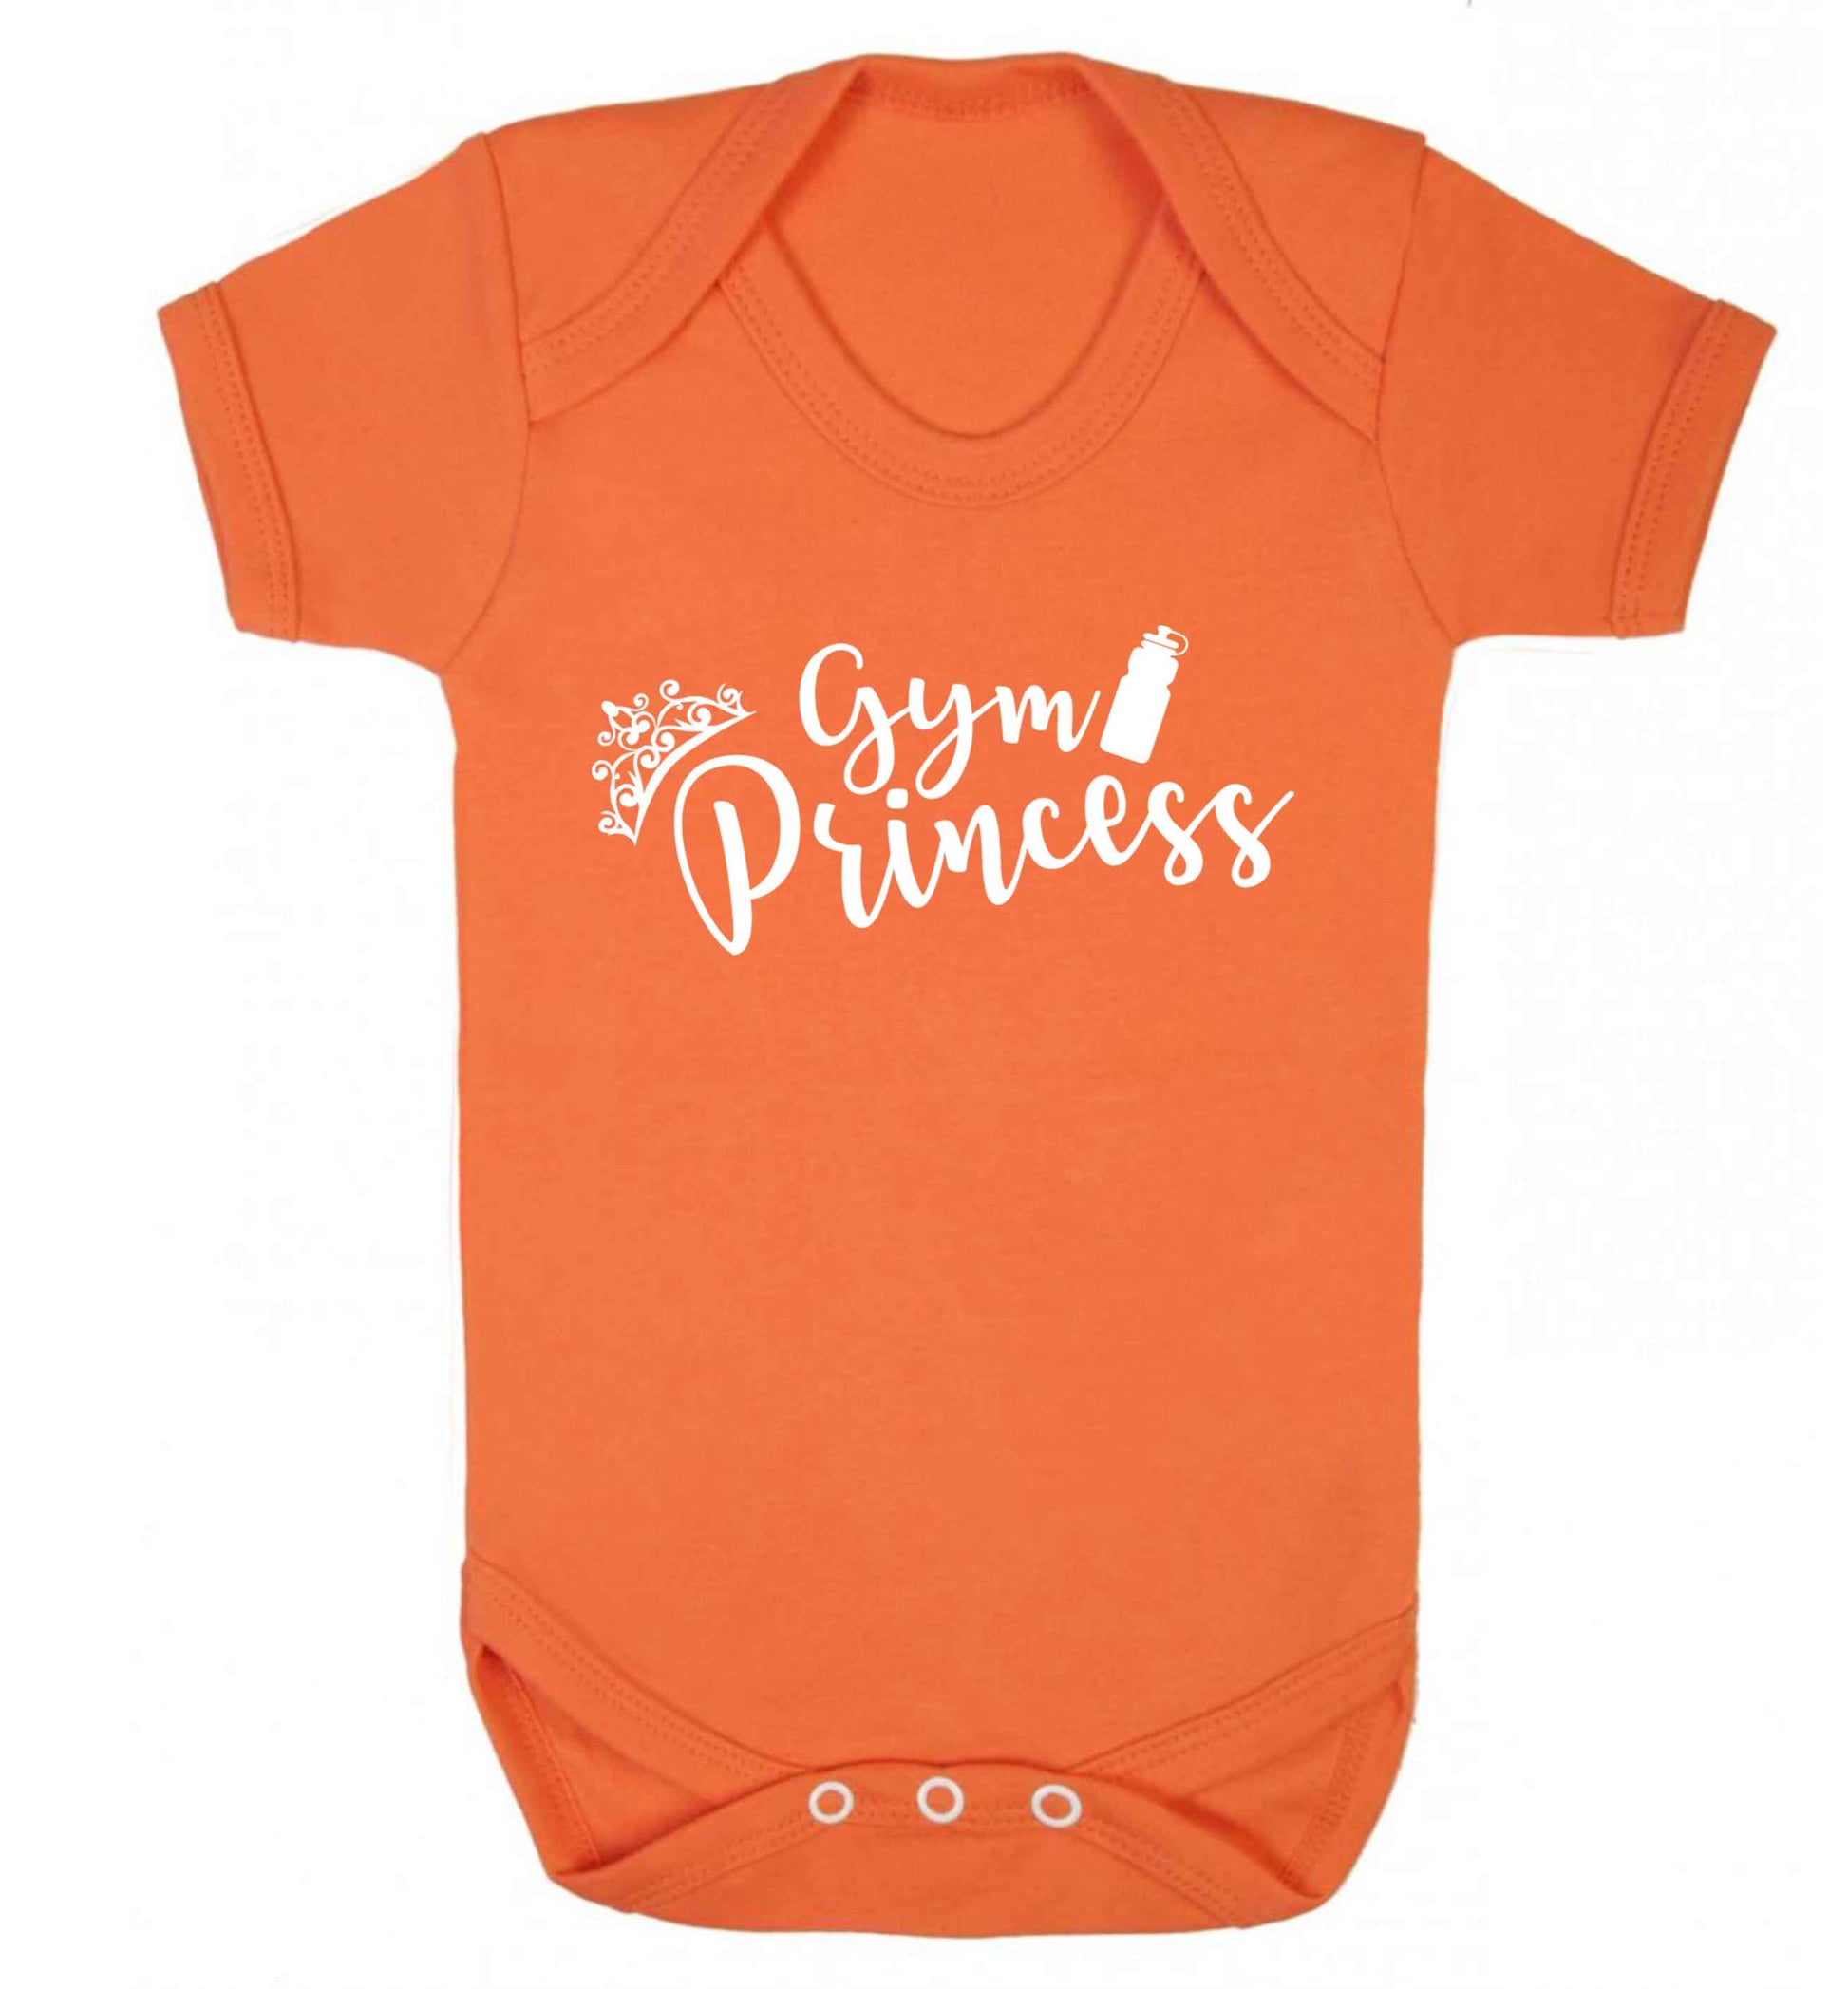 Gym princess Baby Vest orange 18-24 months